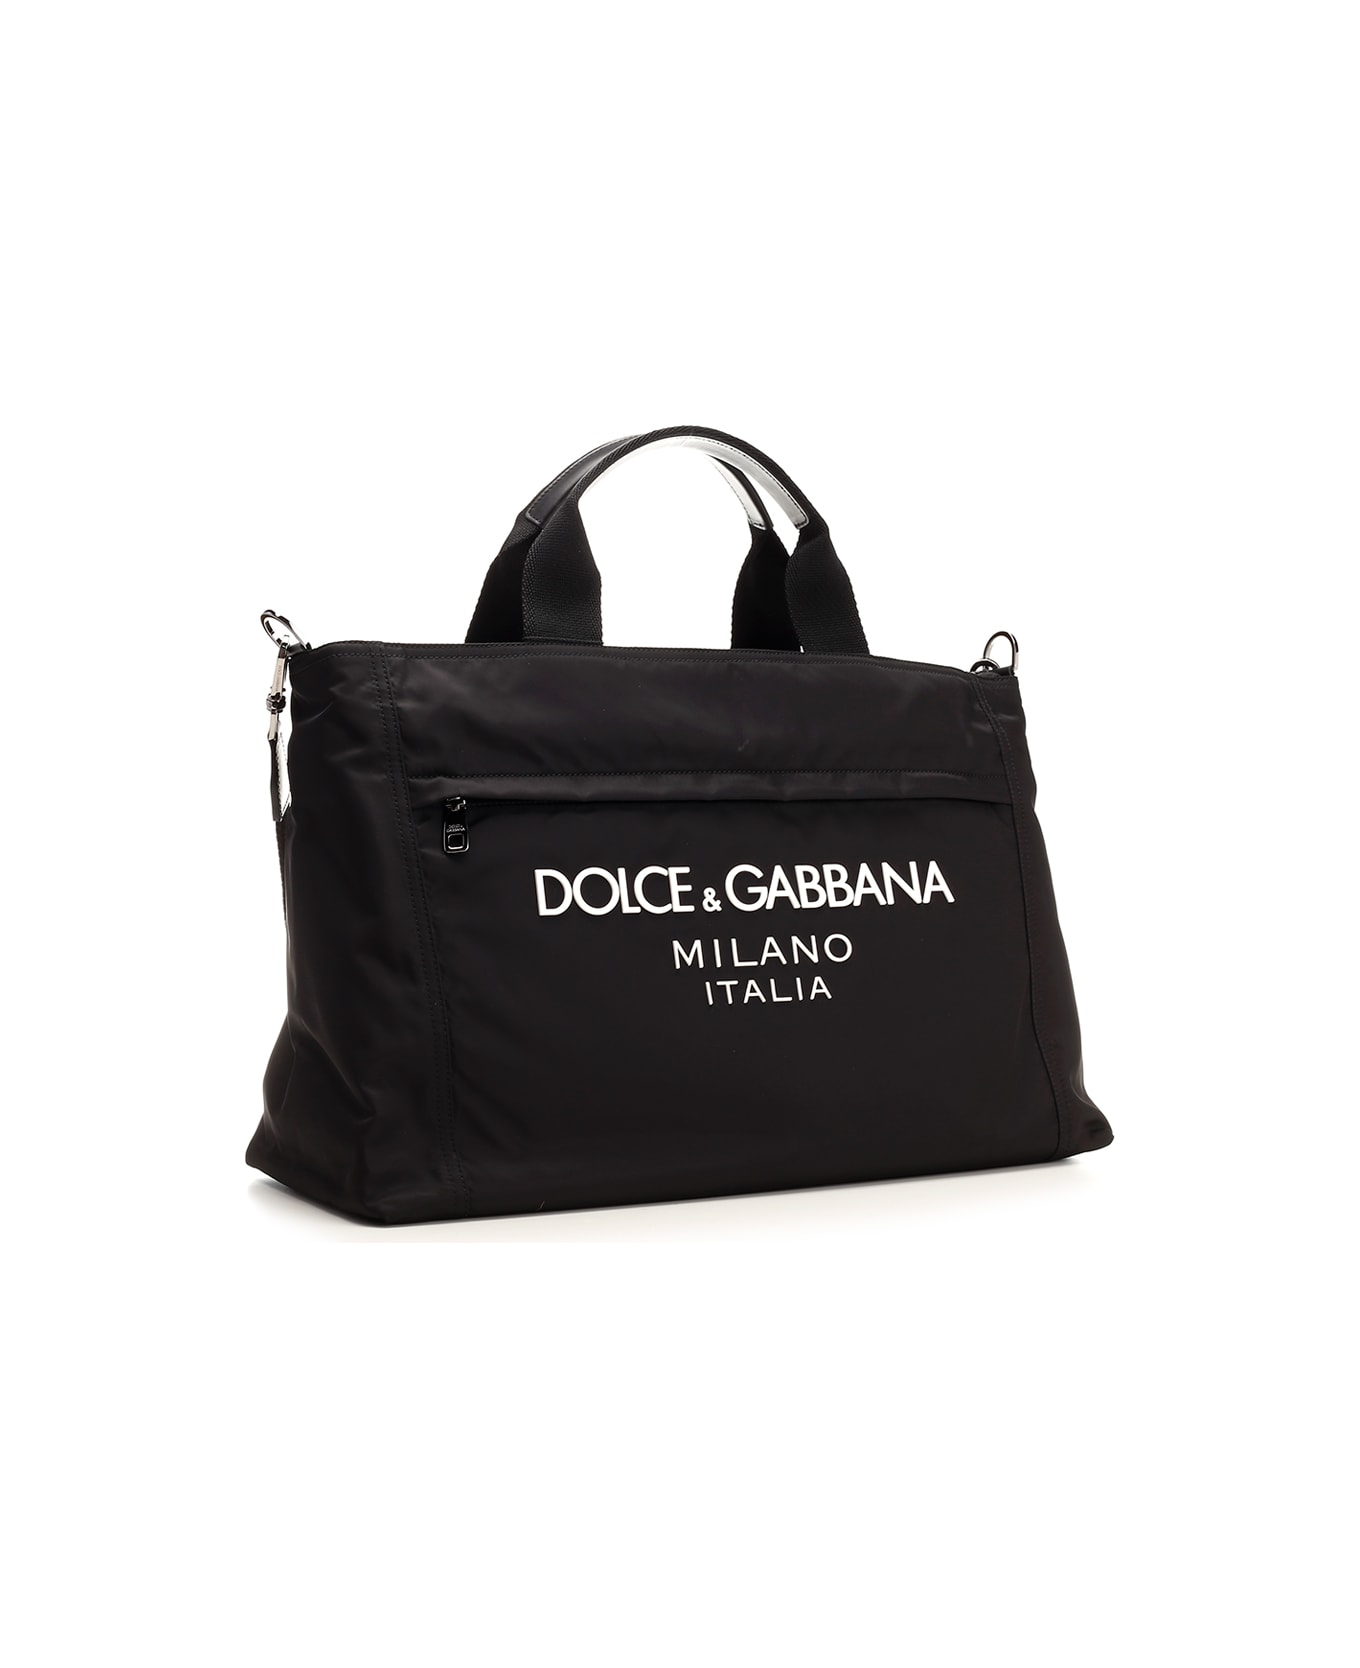 Dolce & Gabbana Signature Tote Bag - BLACK